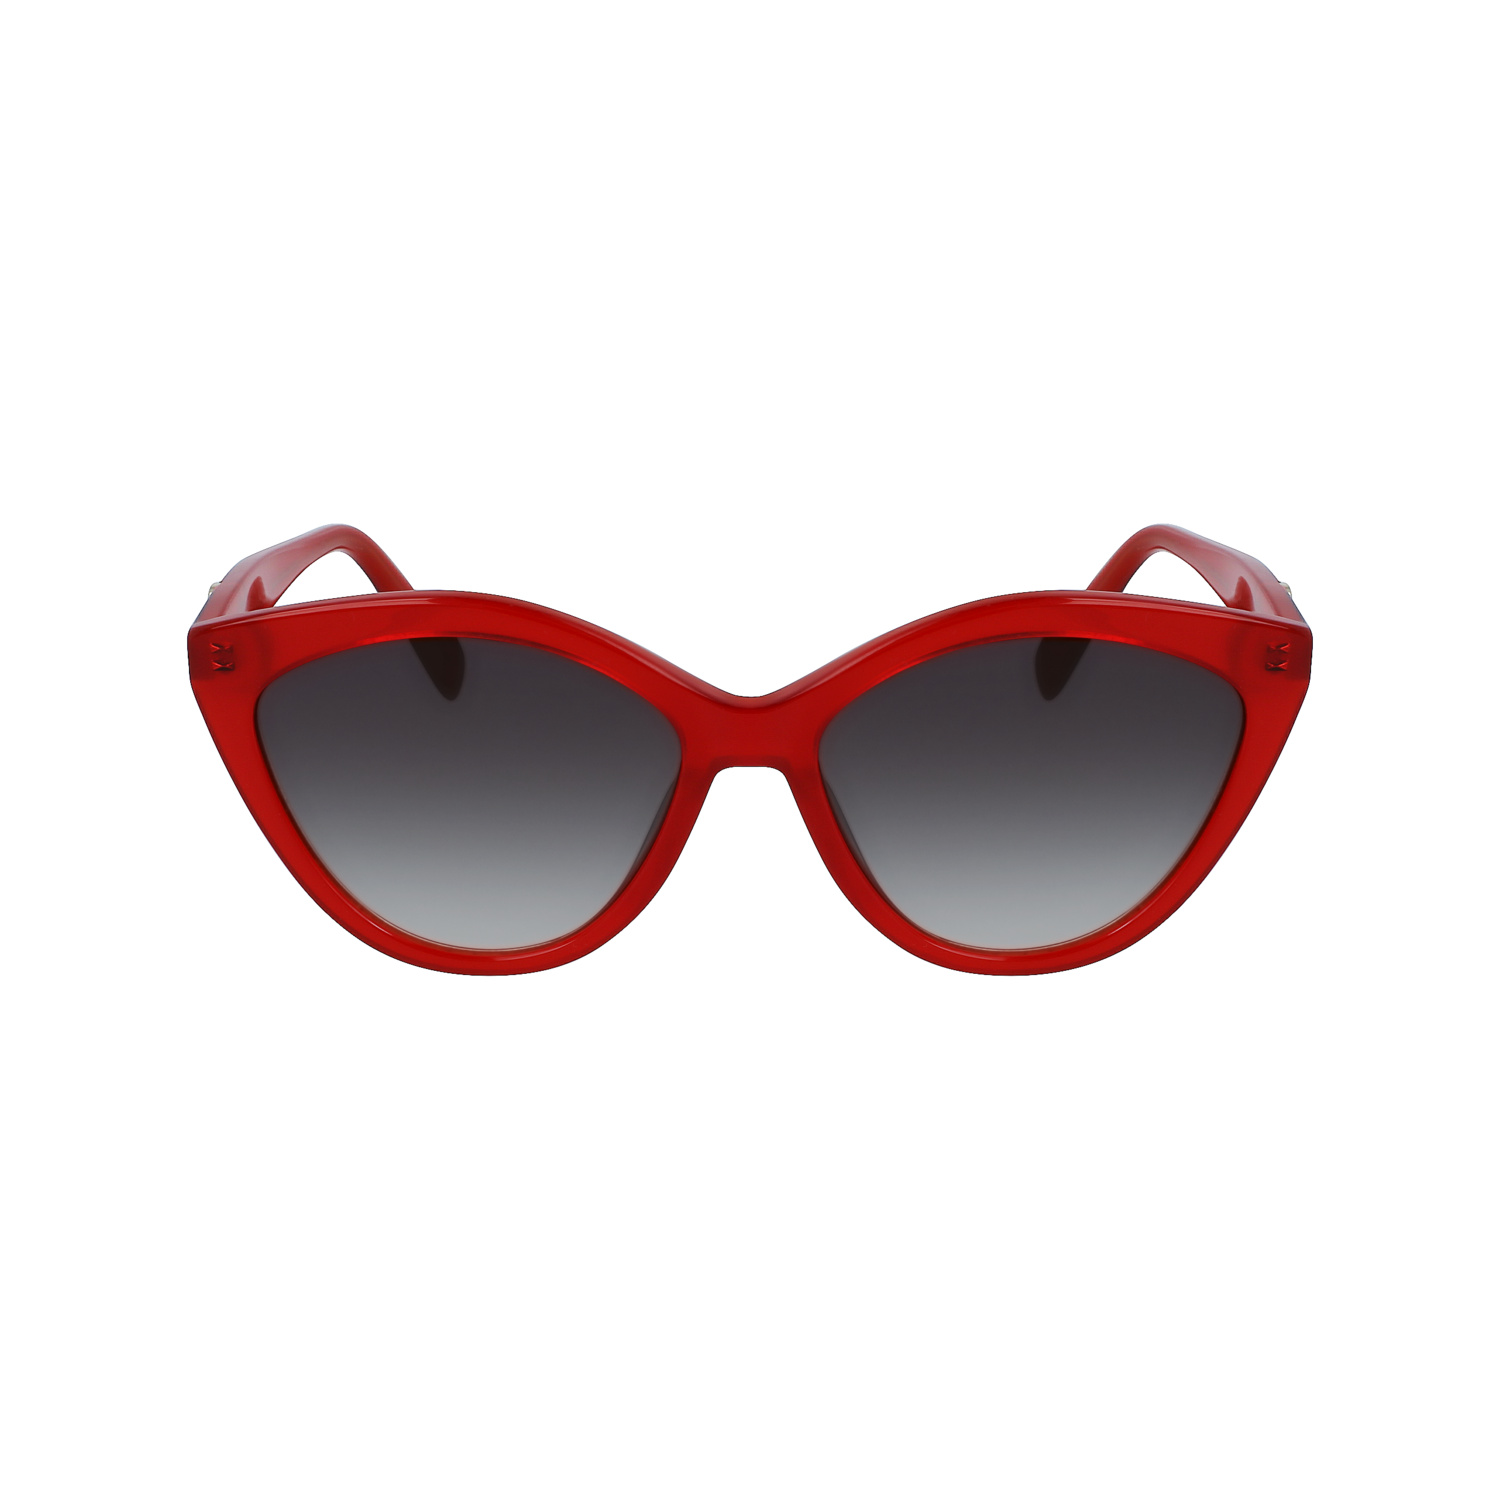 Longchamp Sunglasses In Red